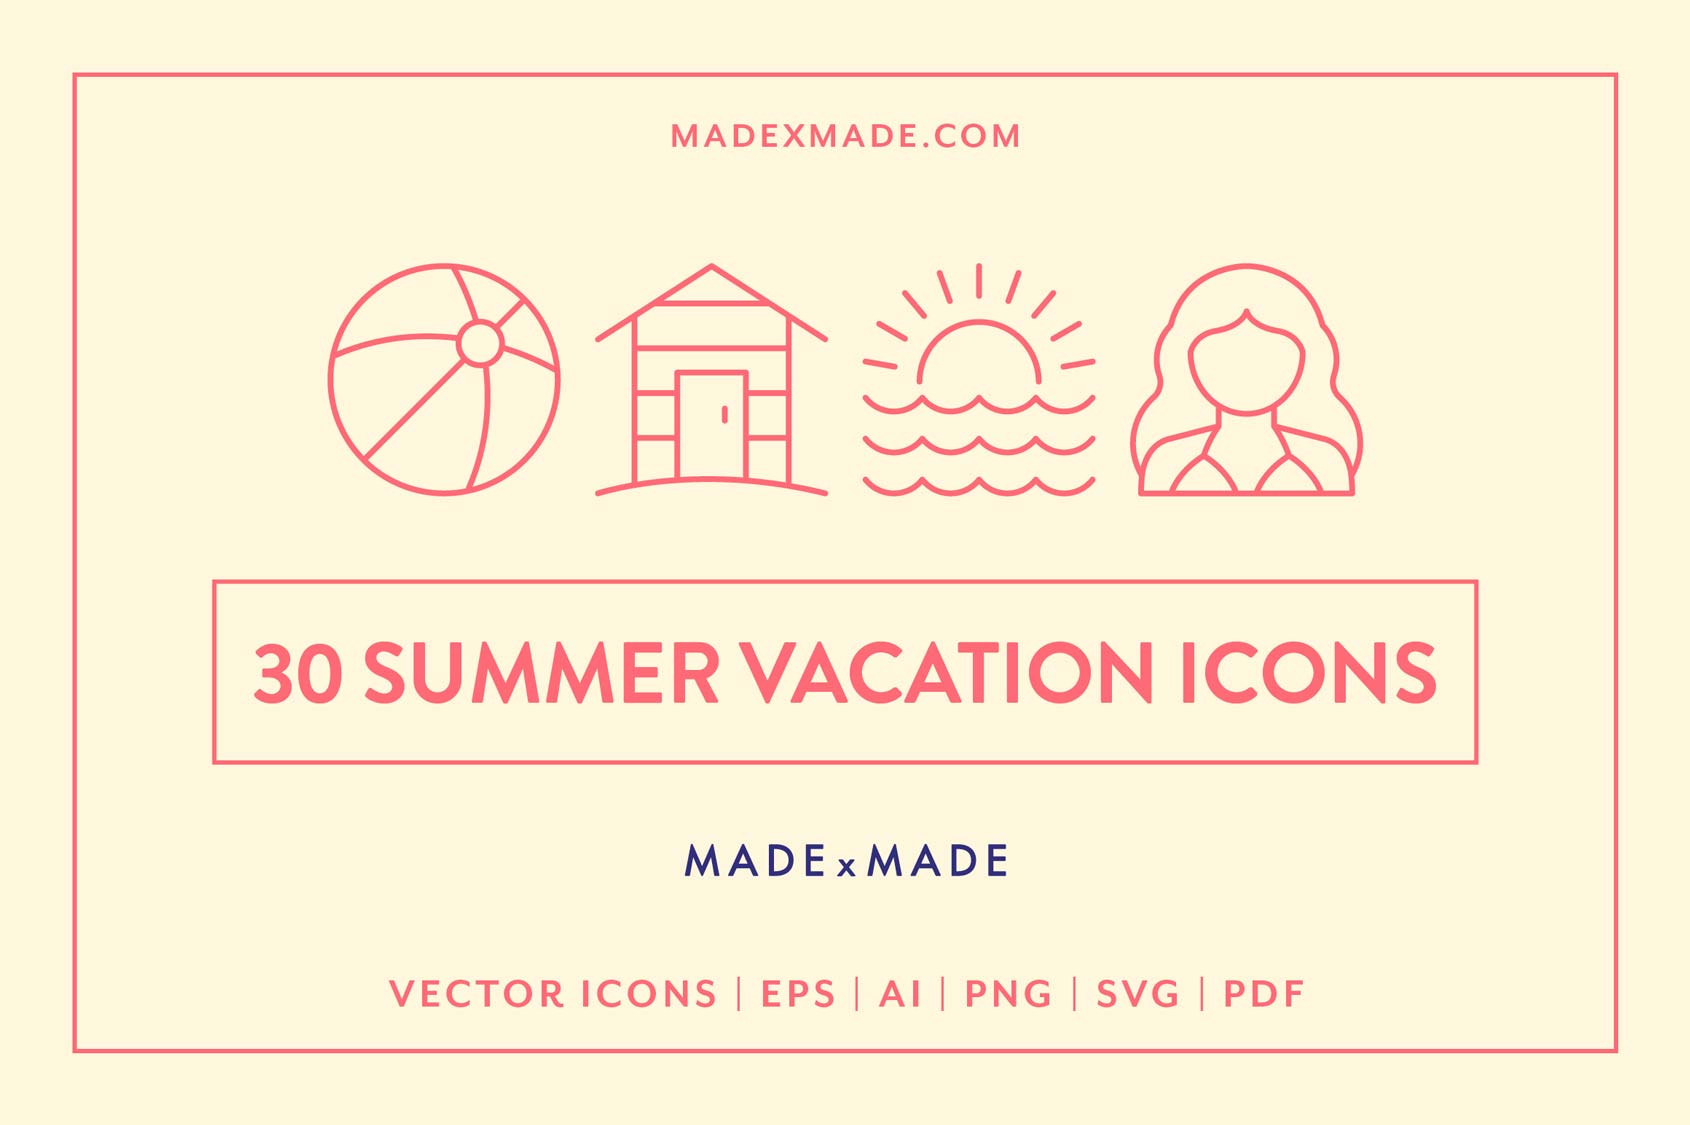 made x made icons summer vacation